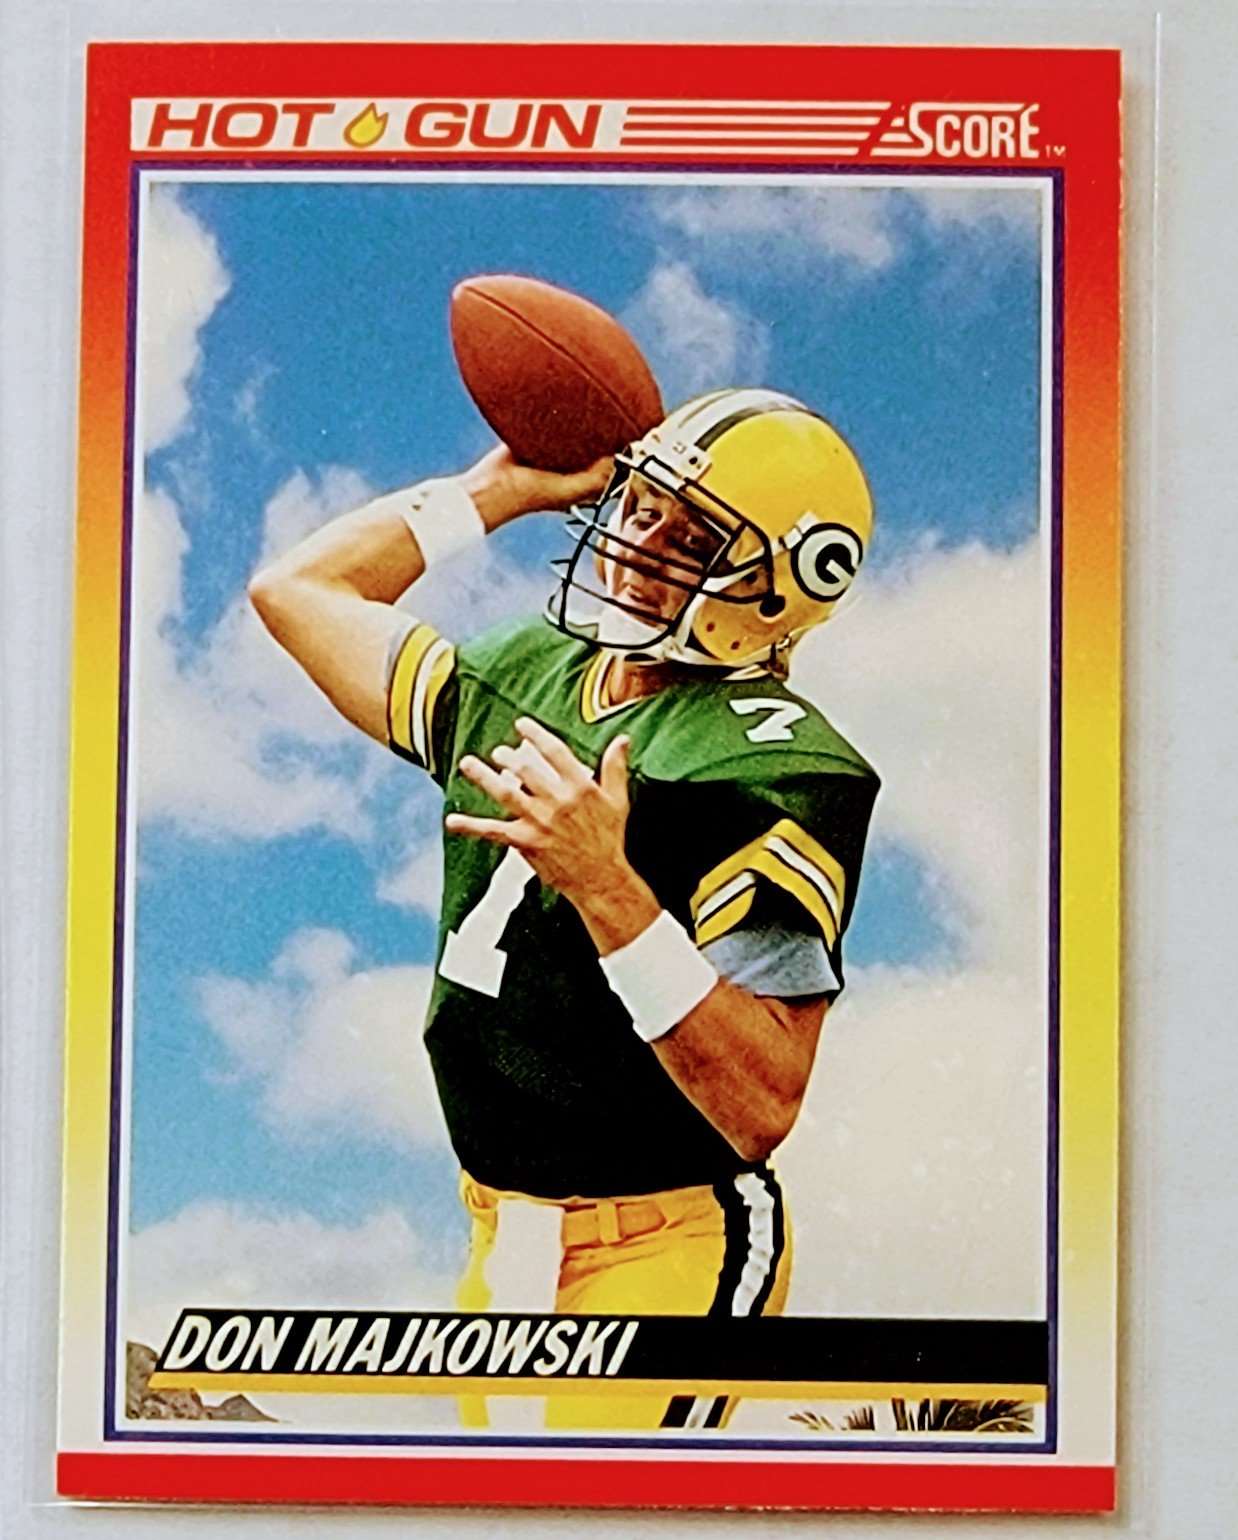 1990 Score Don Majkowski Hot Gun Insert Football Card AVM1 simple Xclusive Collectibles   